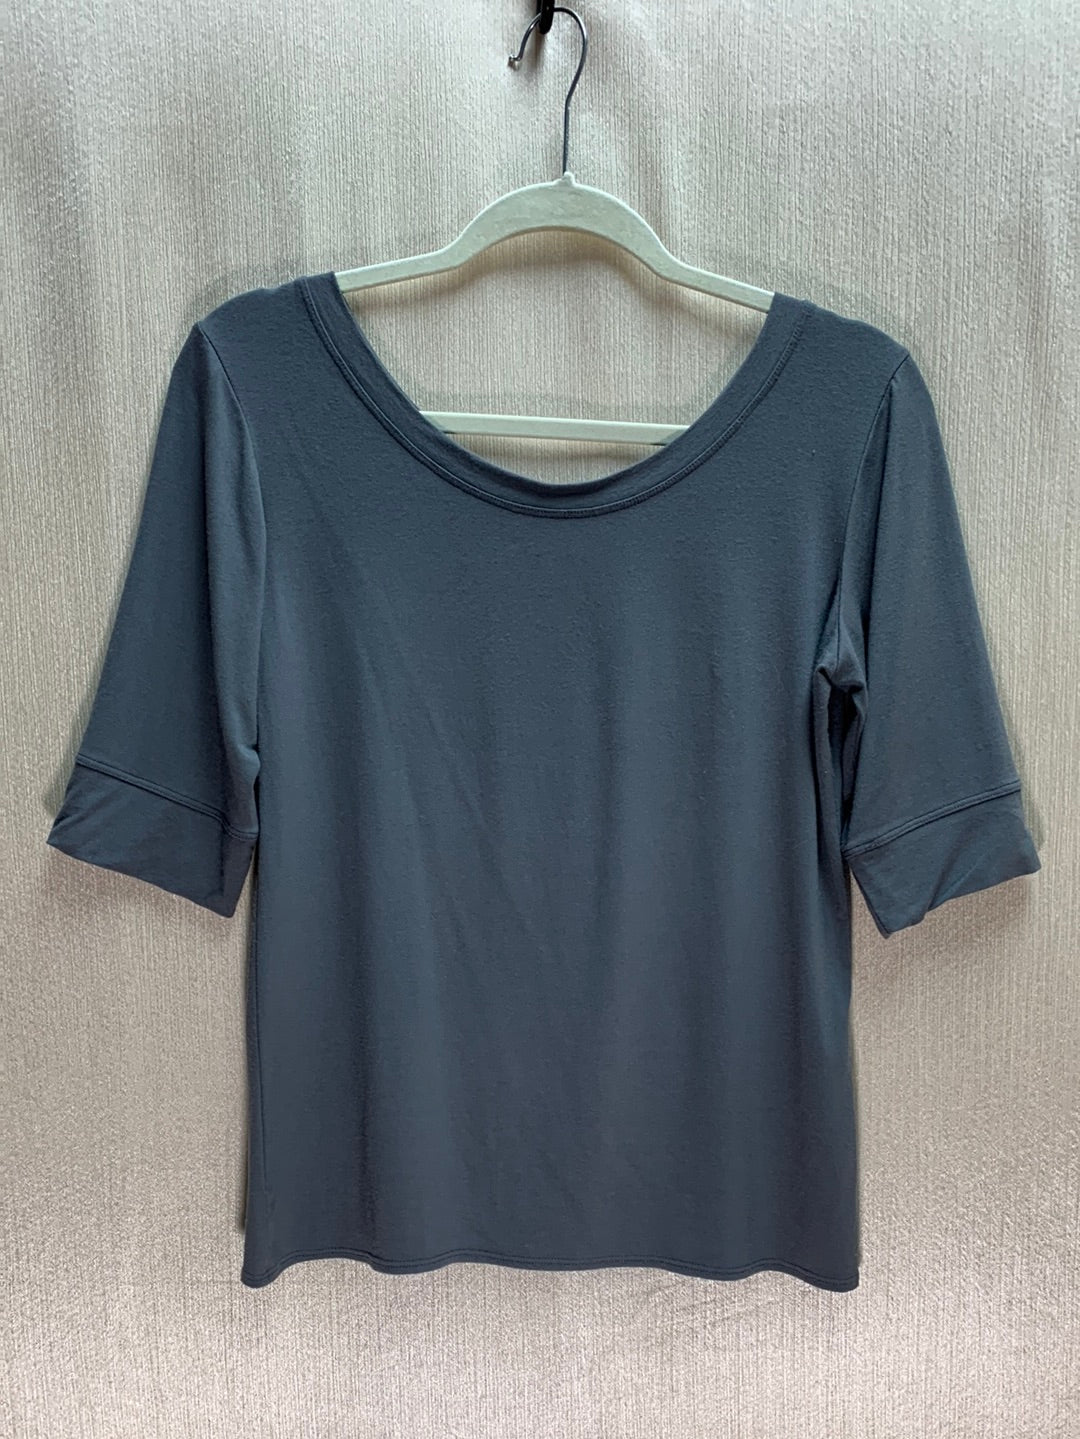 SALAAM grey Rayon Blend Short (Half) Sleeve Ballet Tee Shirt - L